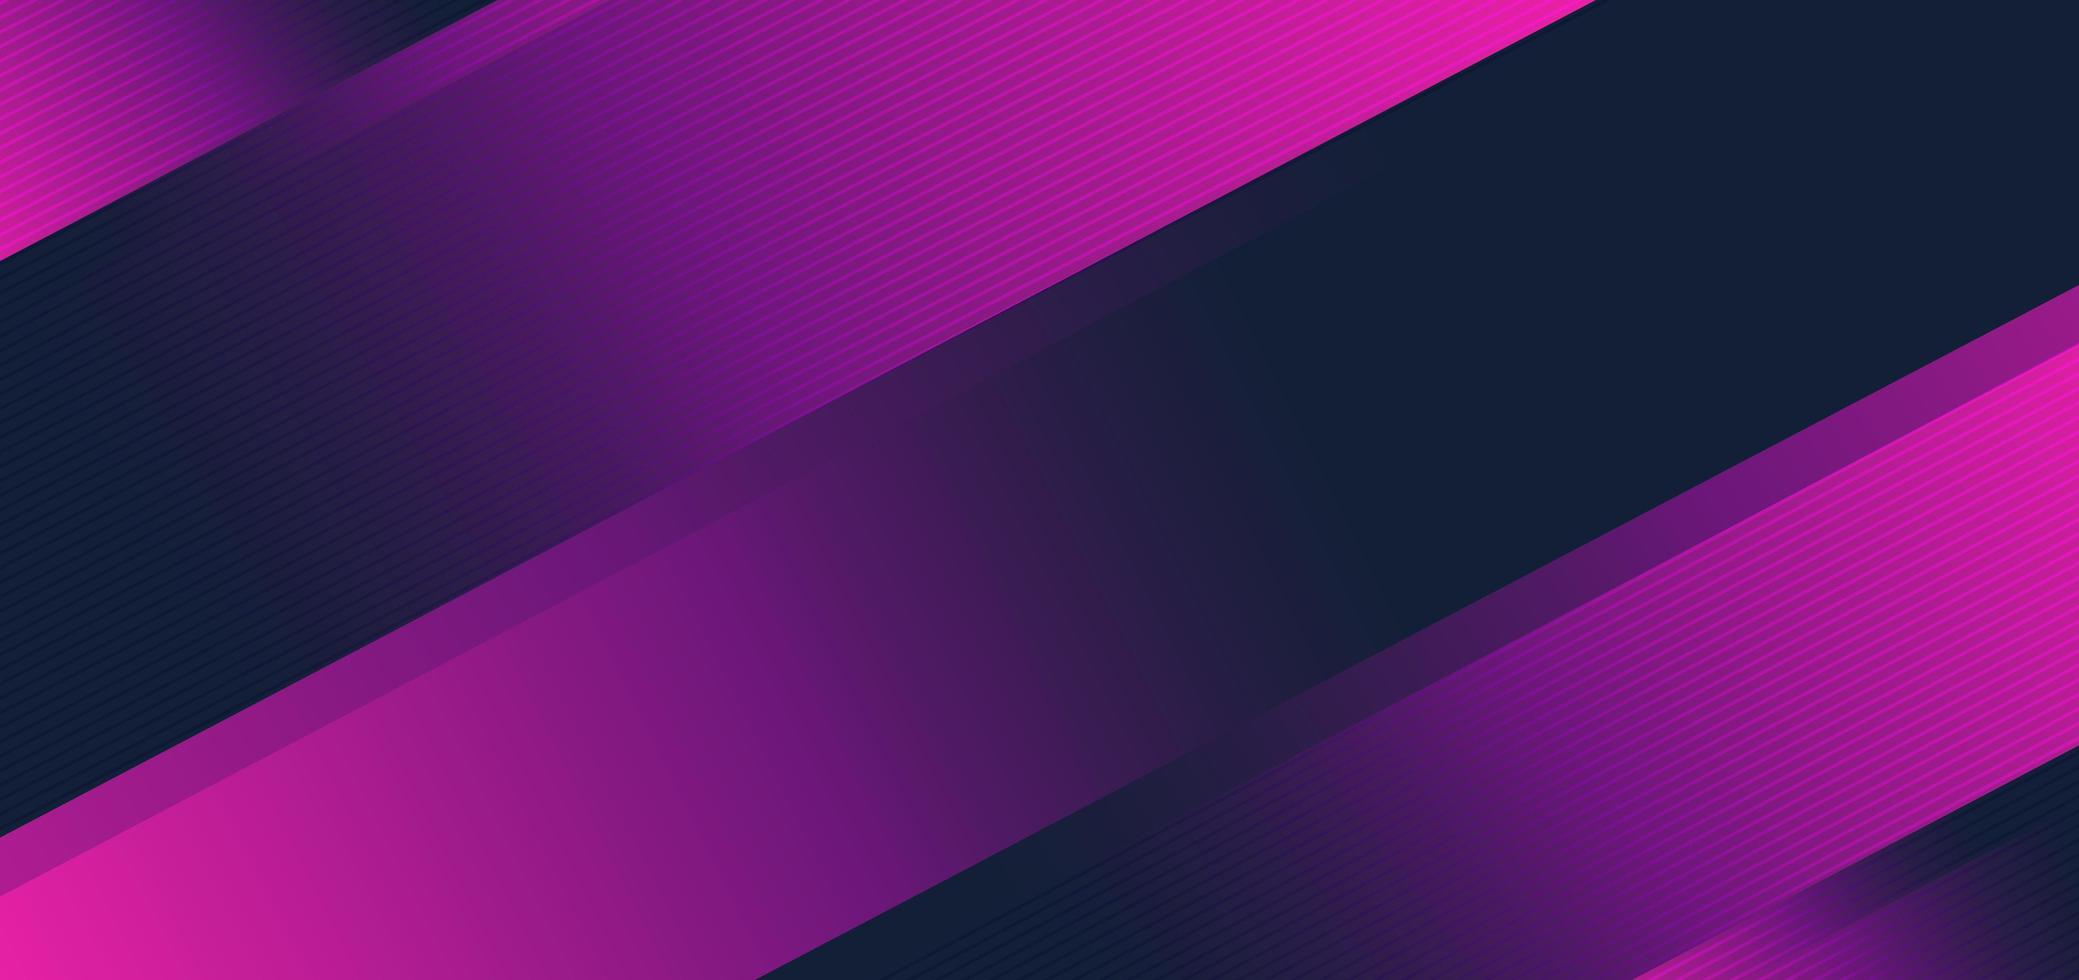 abstracte roze, paarse, blauwe diagonale overlay laag achtergrond. vector